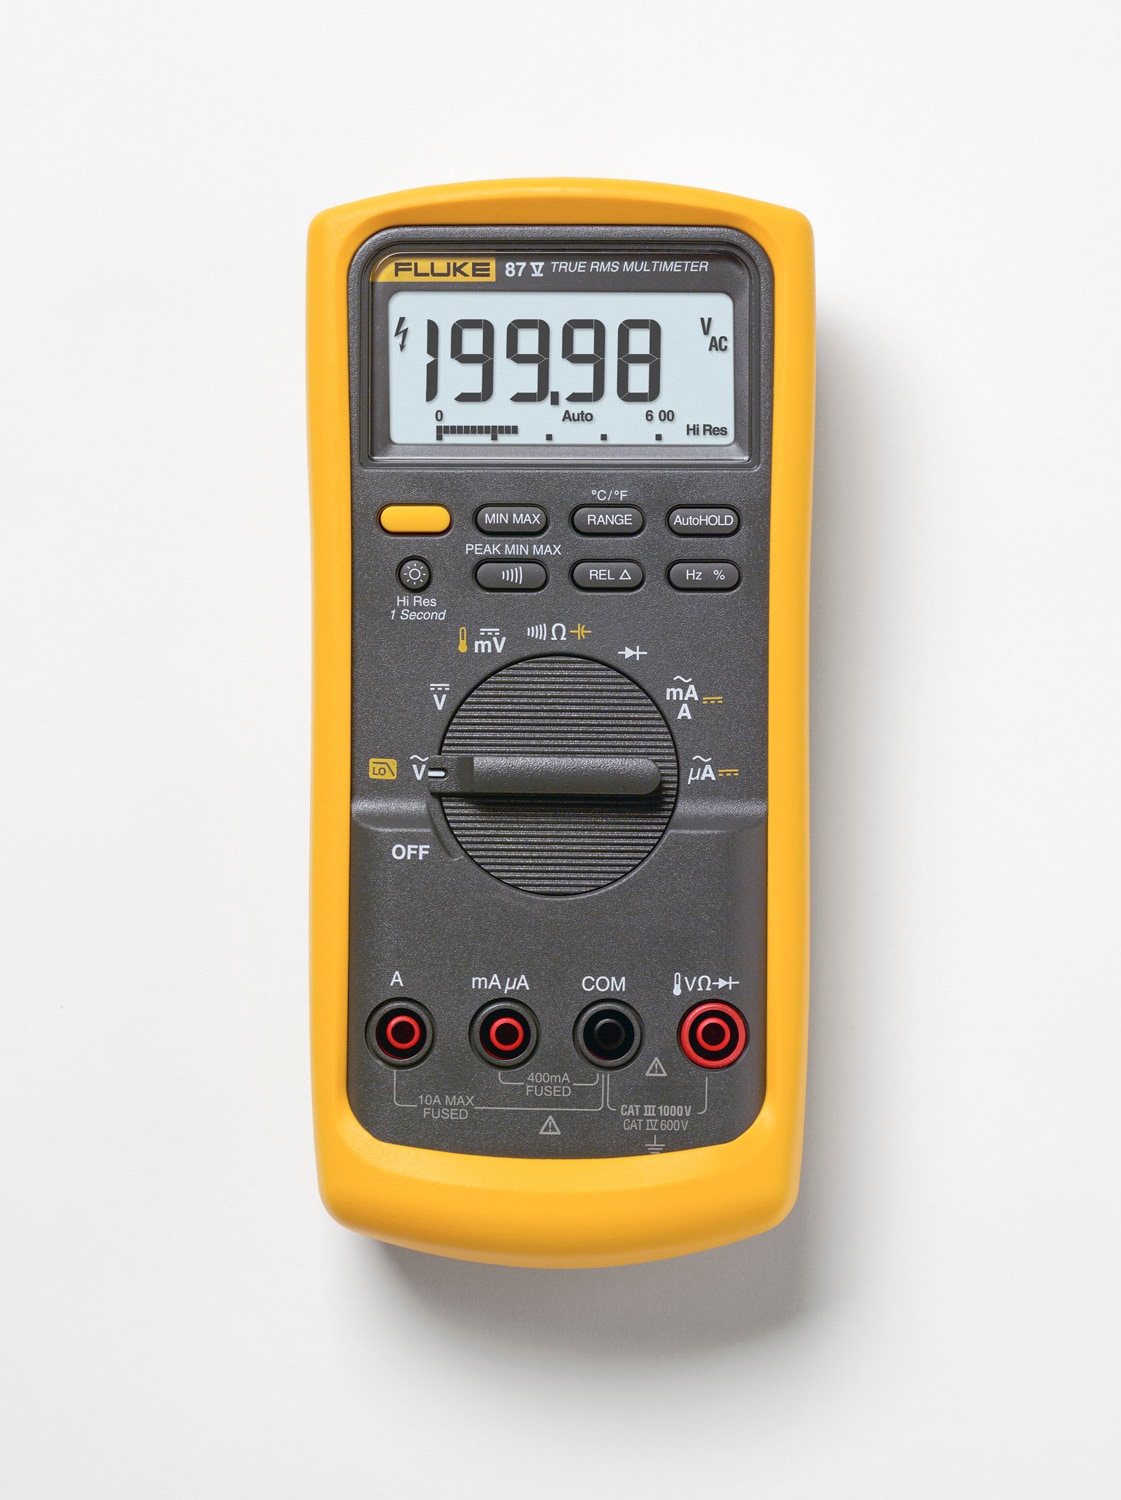 Fluke Digital Multimeter Amp 1000-Volt in Test Meters department Lowes.com